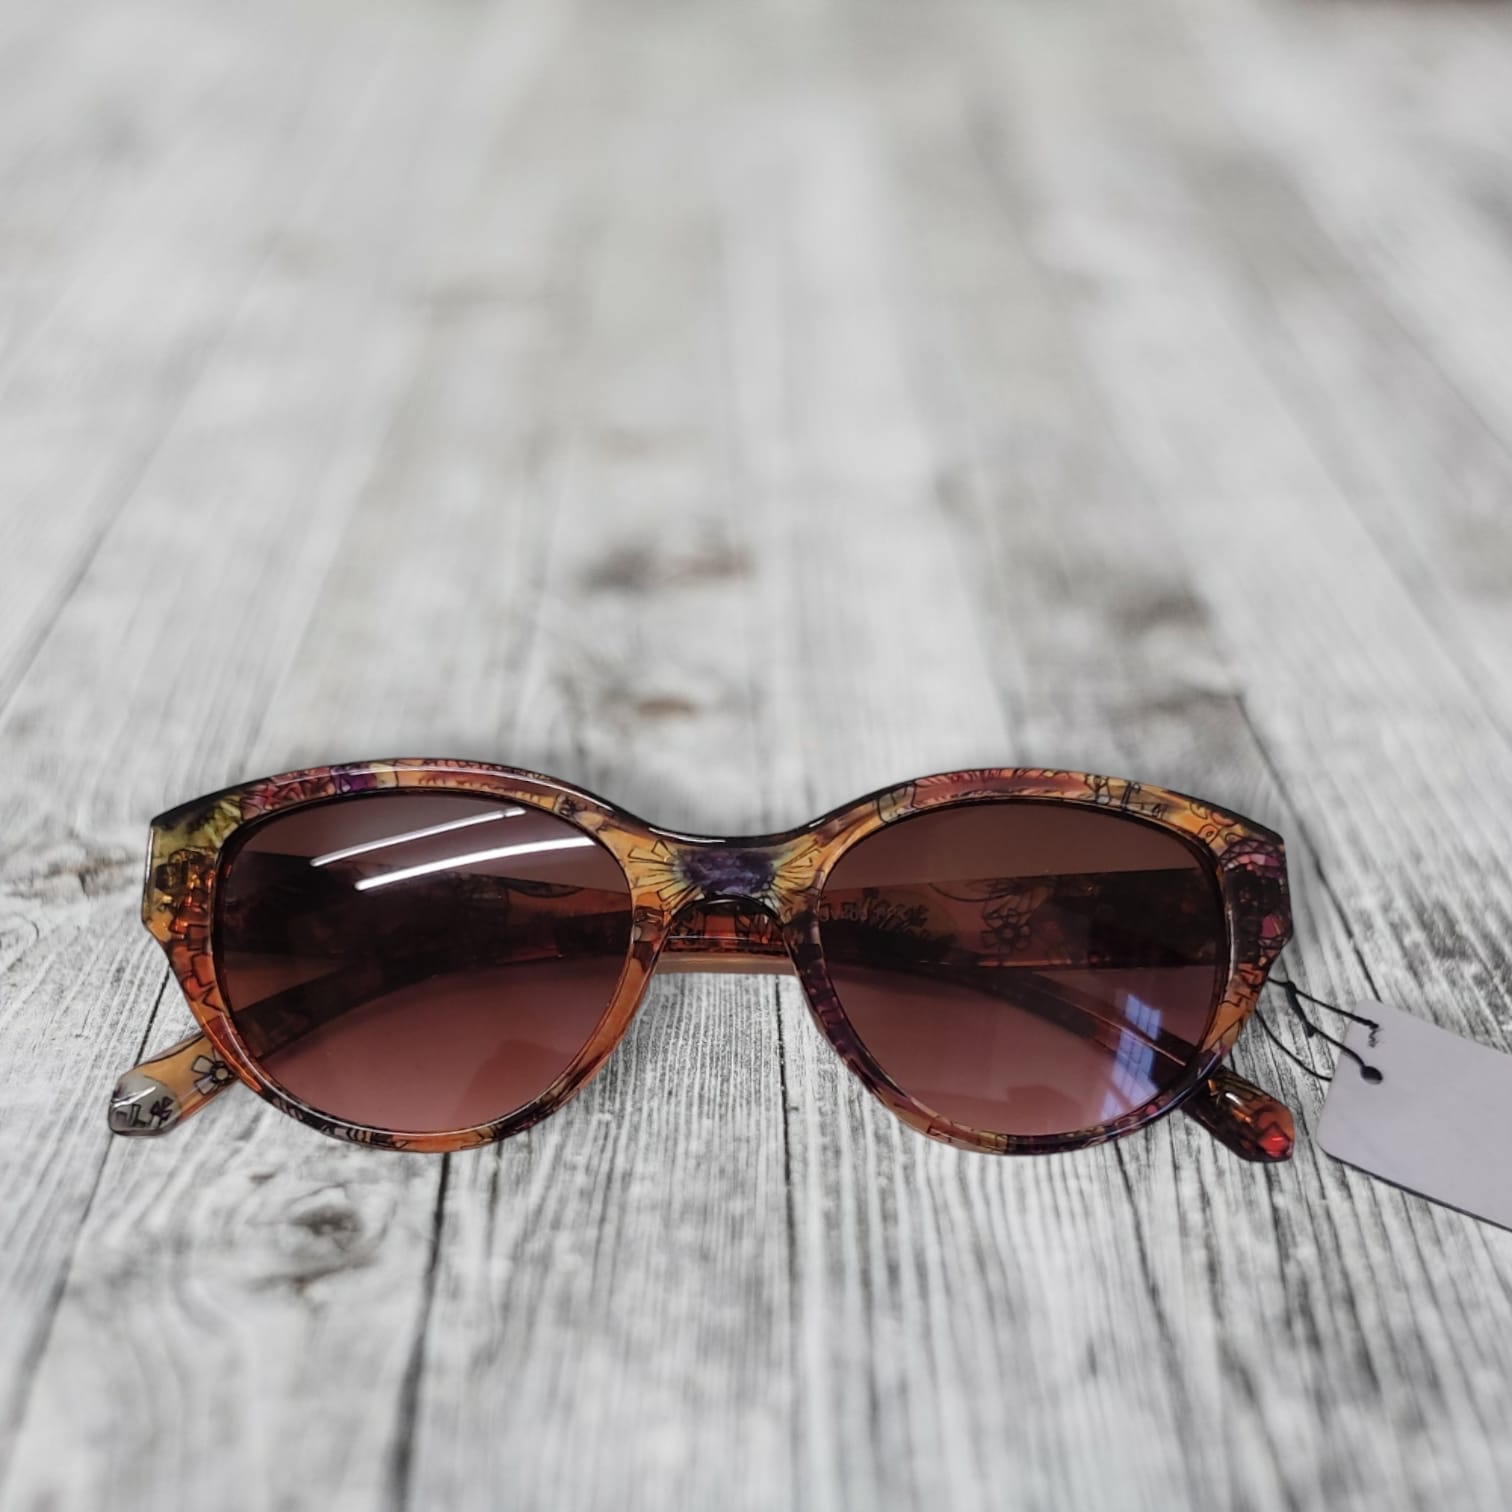 Men's and Women's Round Stylish Funky Look Sunglasses 